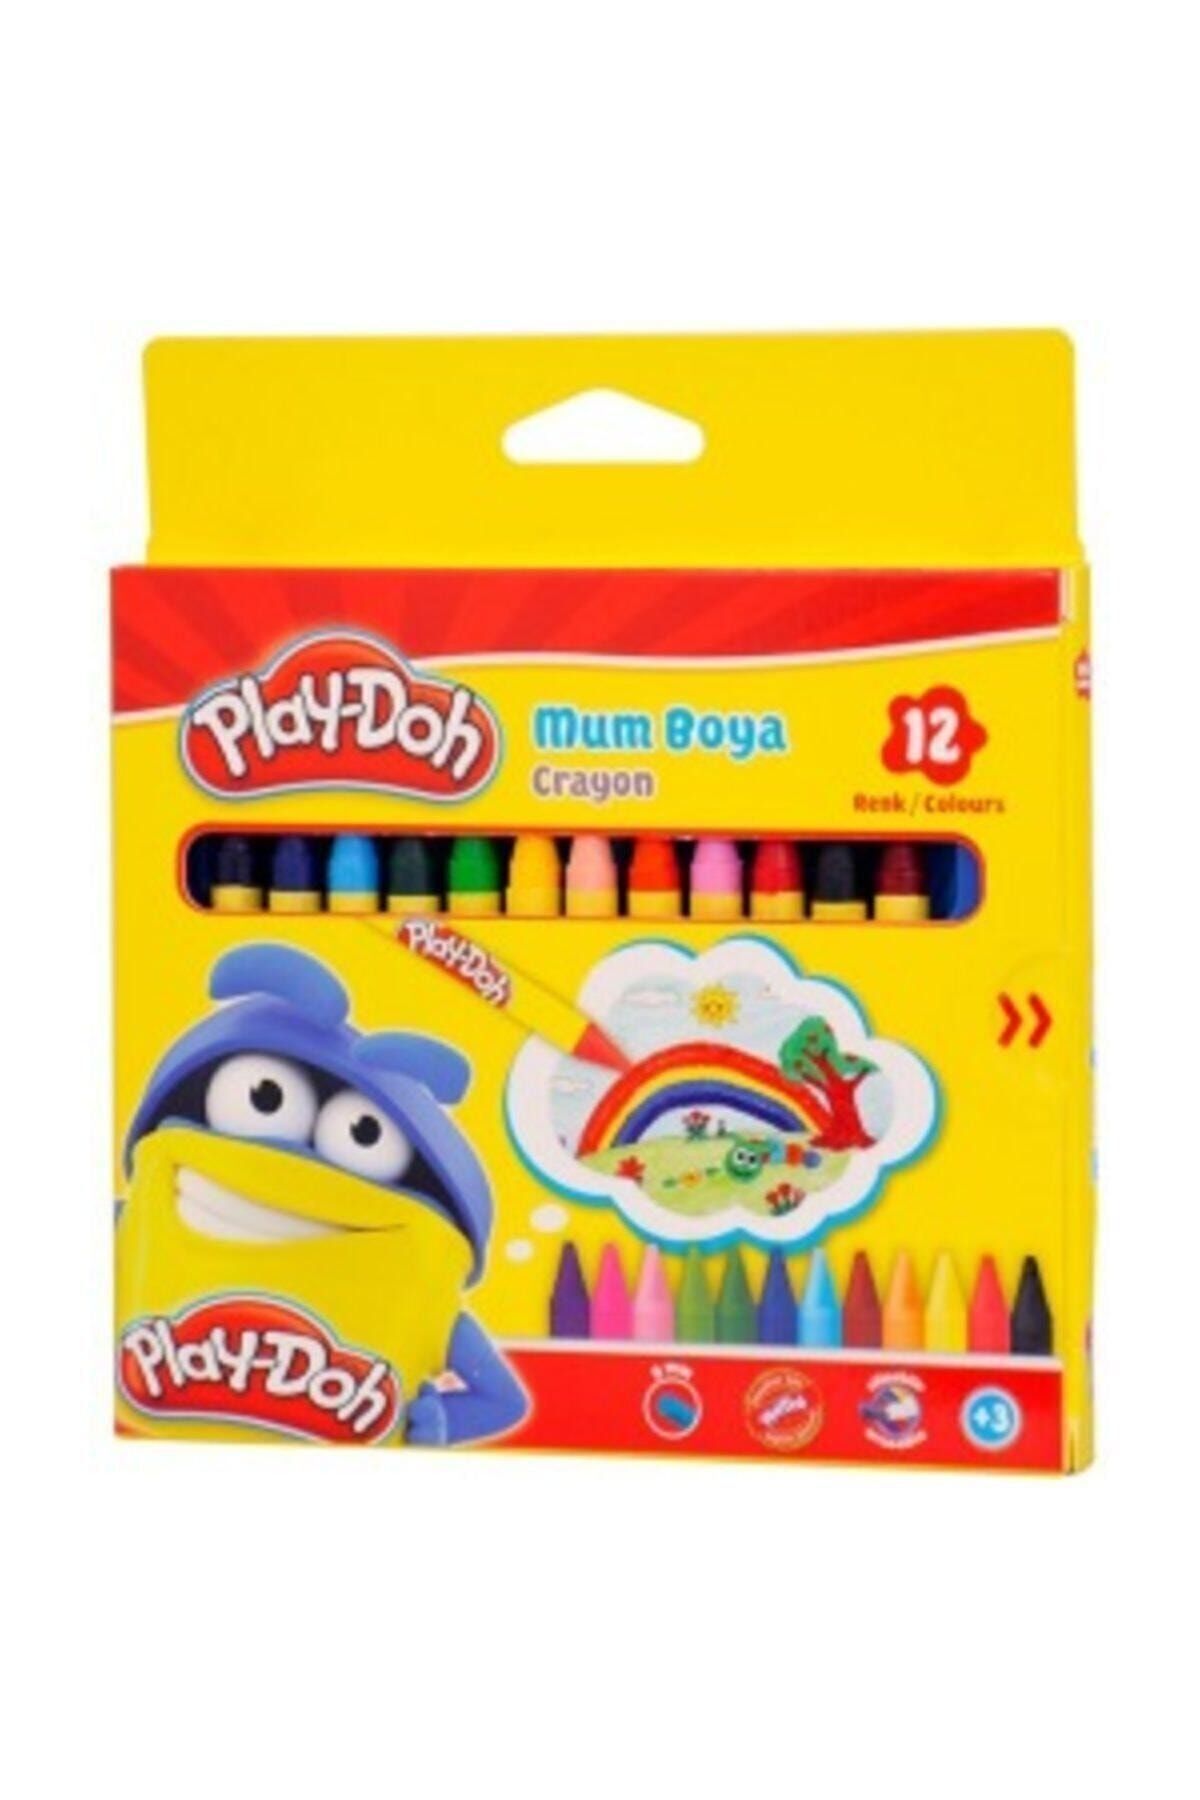 Play Doh 12 Renk Crayon Mum Boya 11 Mm